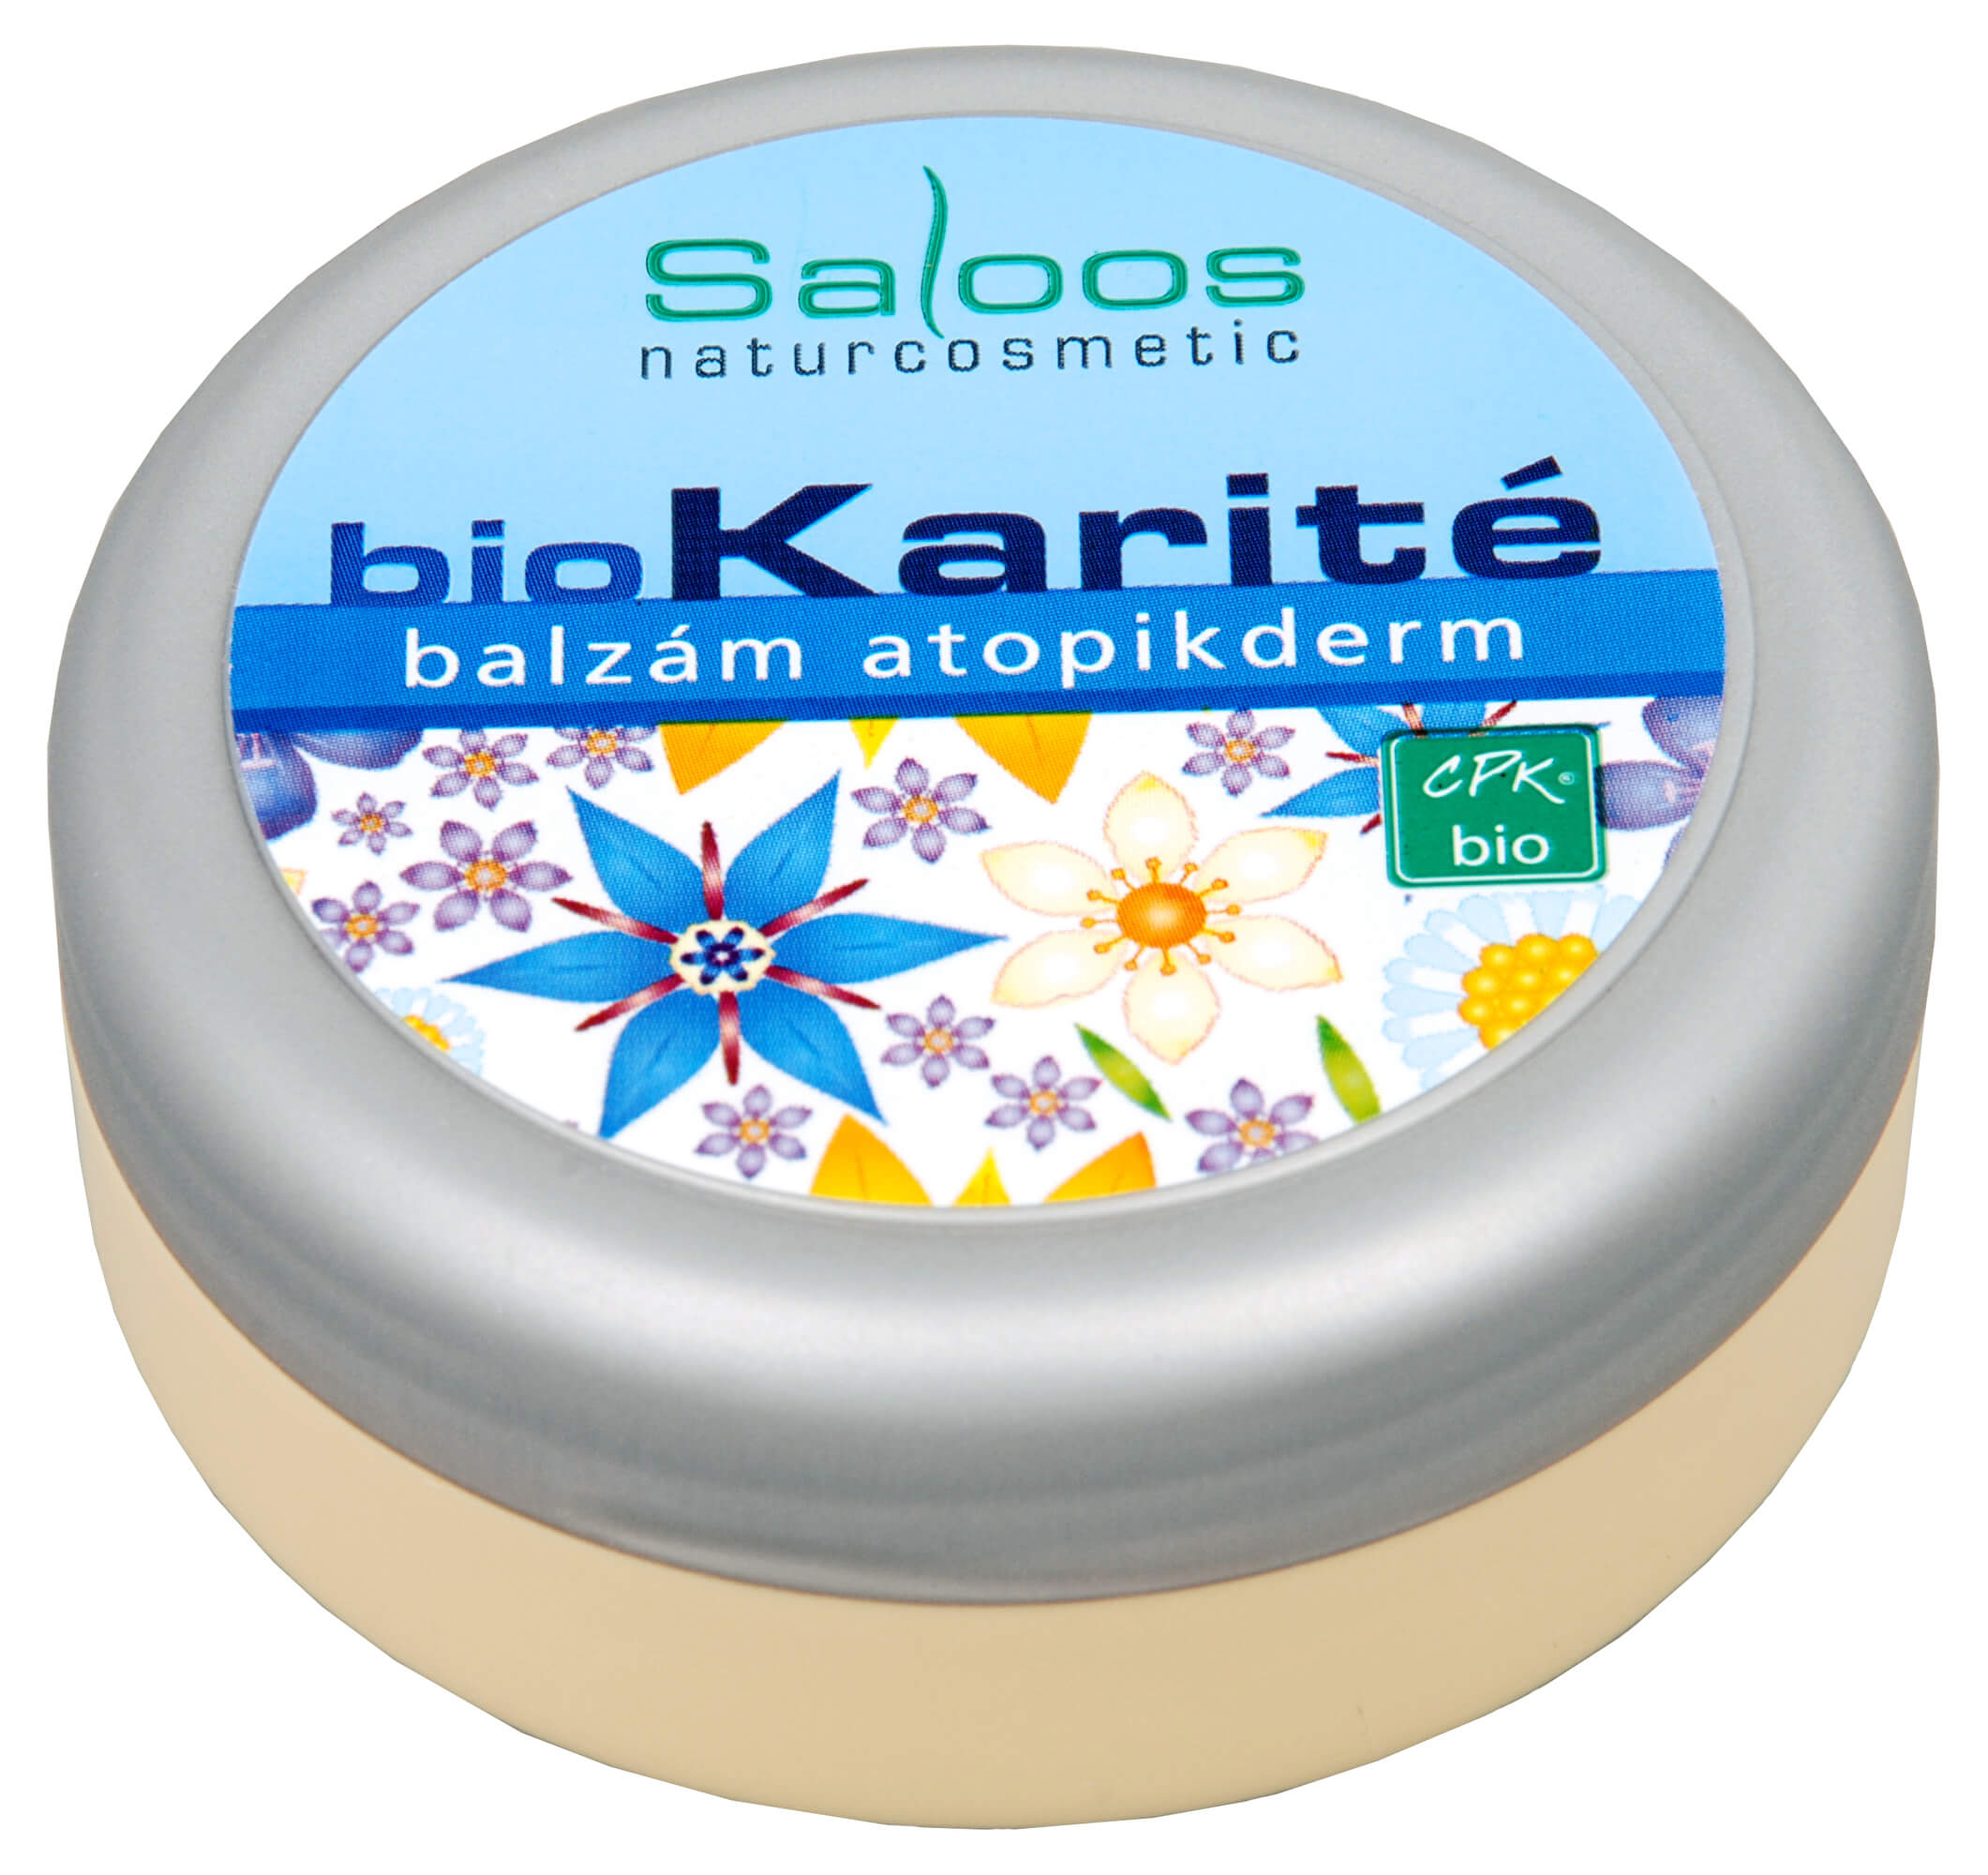 Zobrazit detail výrobku Saloos Bio Karité balzám - Atopikderm 50 ml